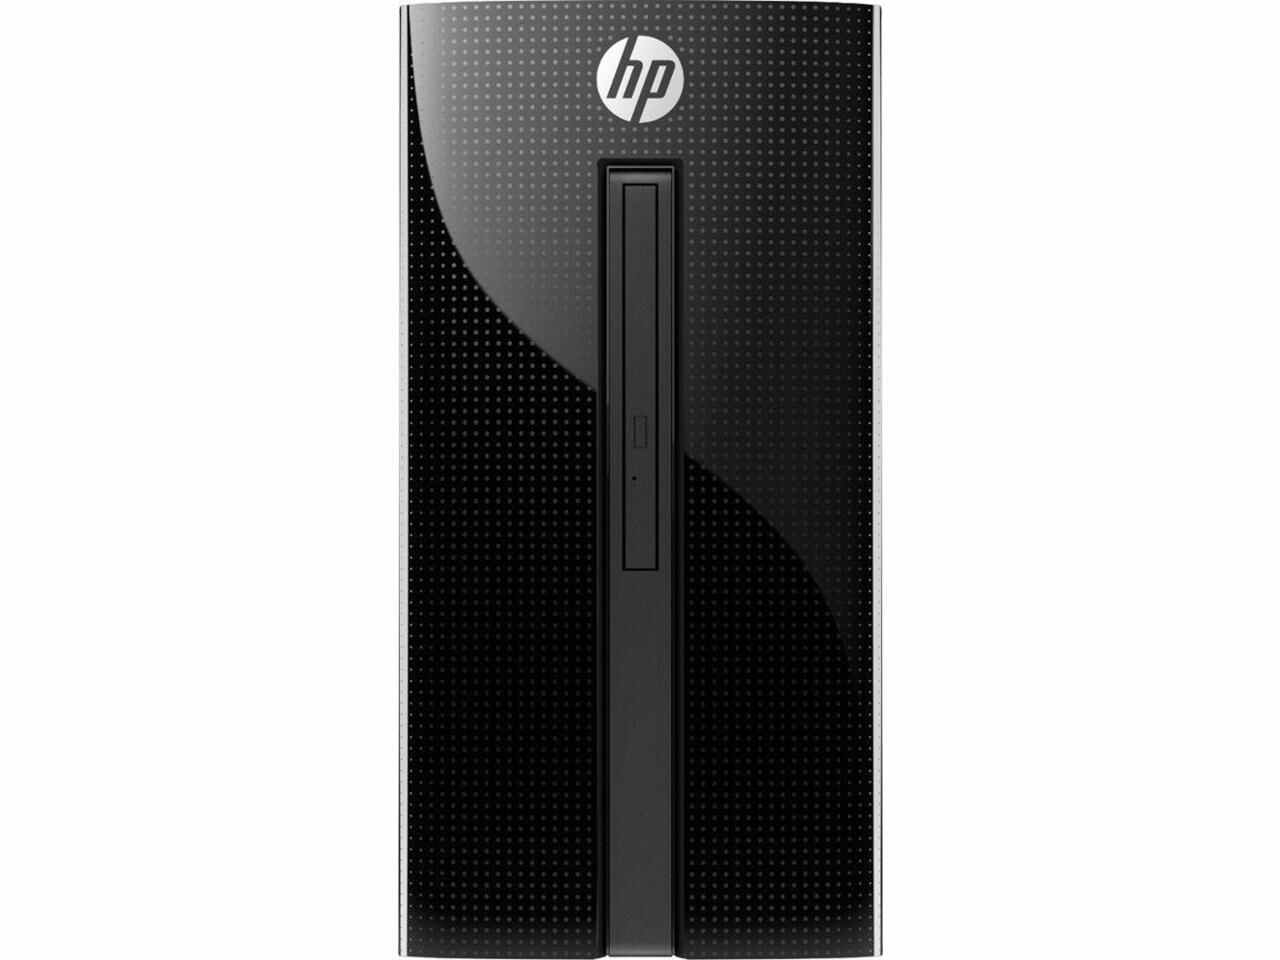 HP Flagship High-Performance Desktop| Intel Quad Core i7-7700T| 16GB DDR4 SDRAM |1T 7200 RPM HDD | DVD+/-RW| Bluetooth 4.2| WIFI| HDMI |Windows 10 | Includes Keyboard and Mouse